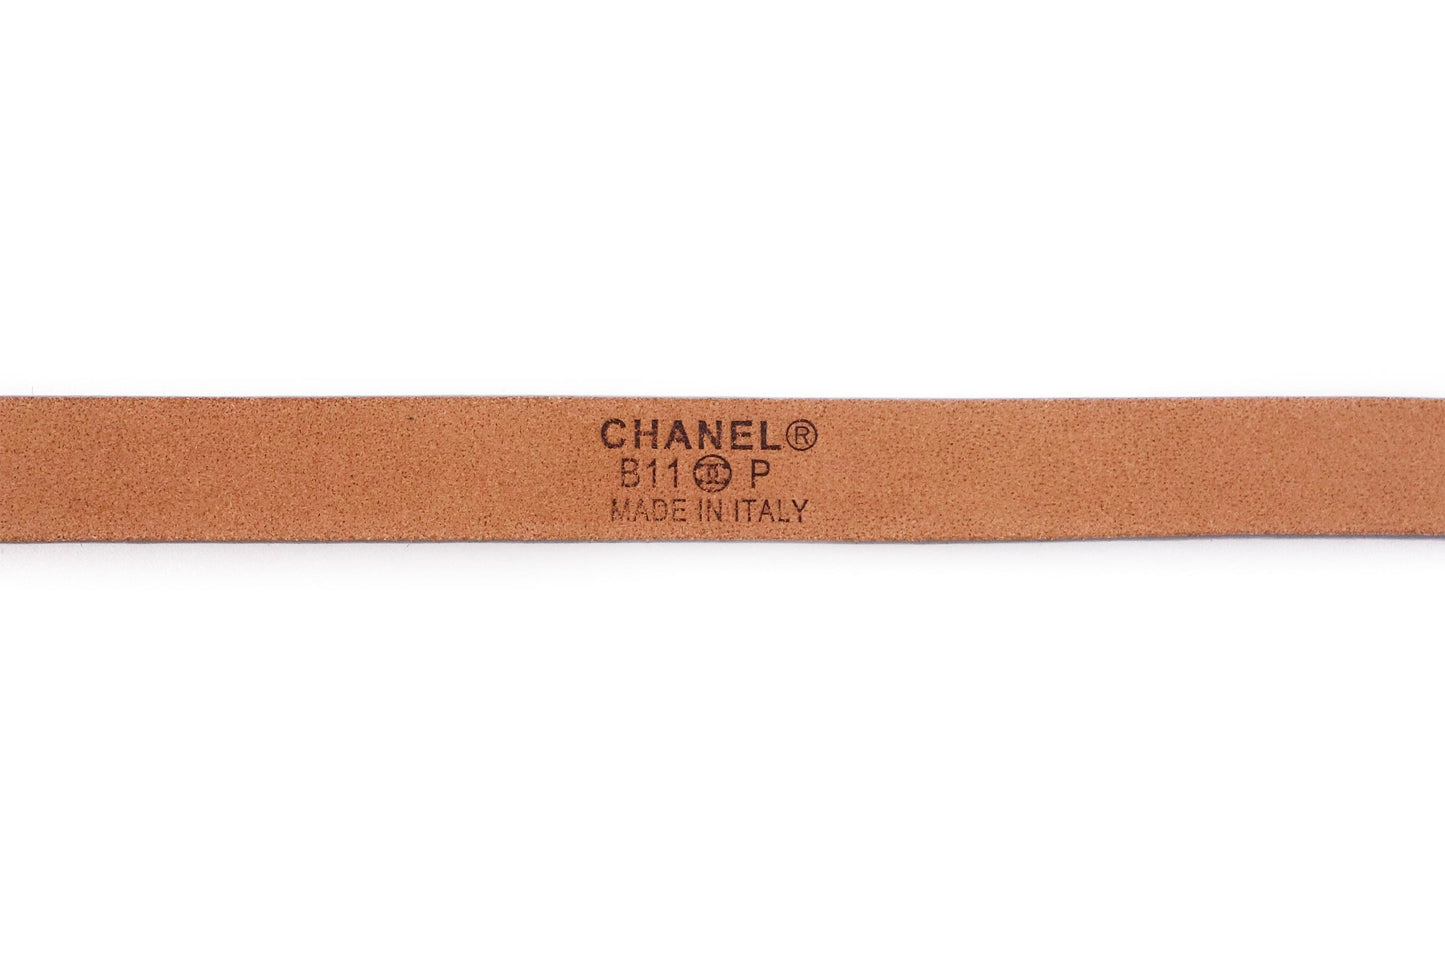 Chanel Spring 2011 Runway Leather Sequin Silver Tweed Glitter Skinny Belt